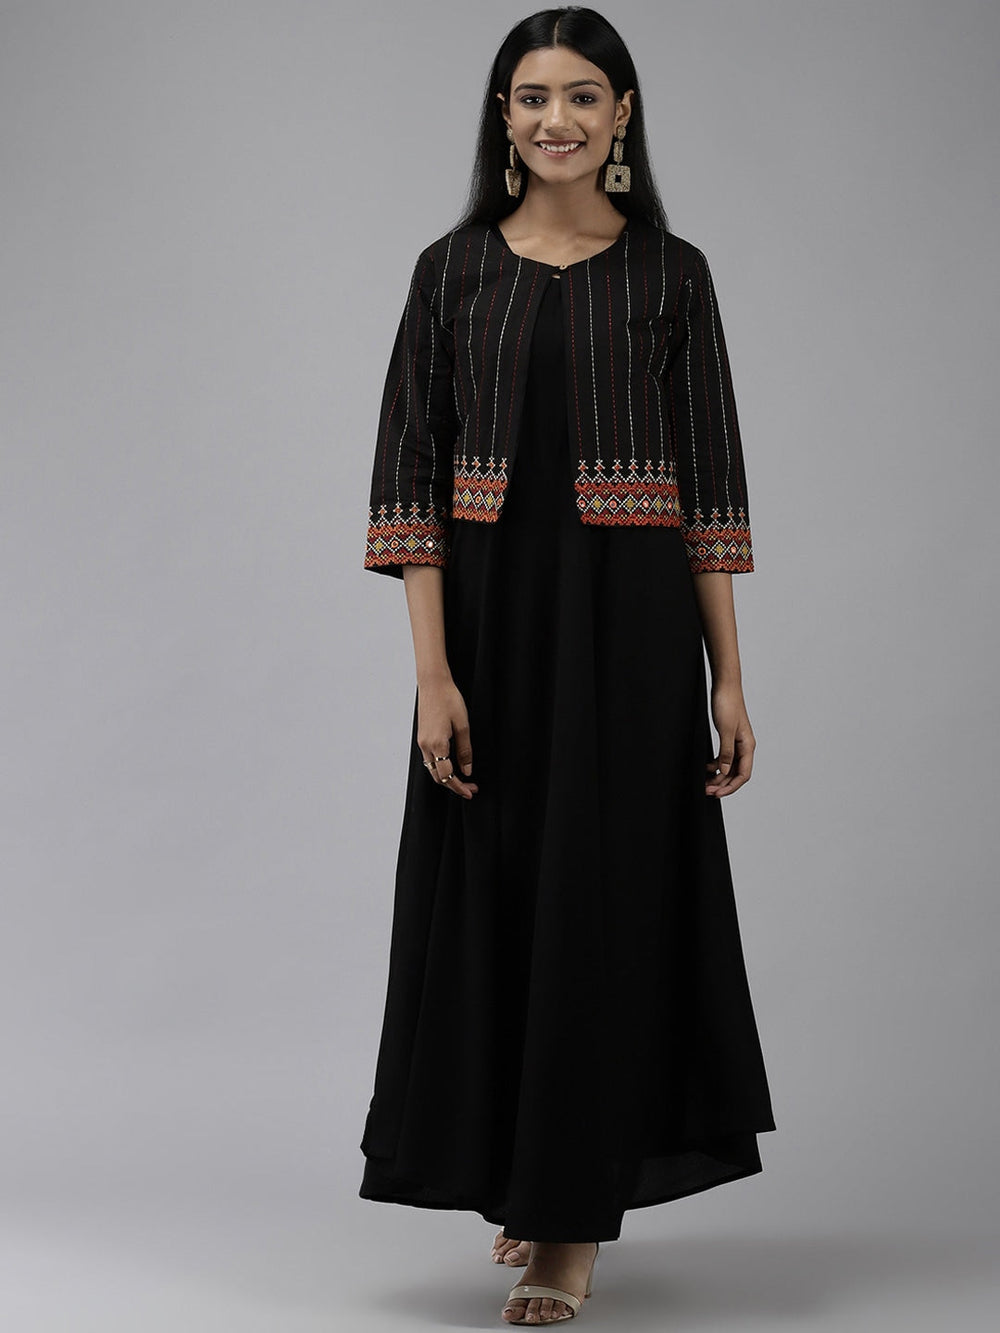 Black Ethnic Dress with Jacket-Yufta Store-9689DRSBKS